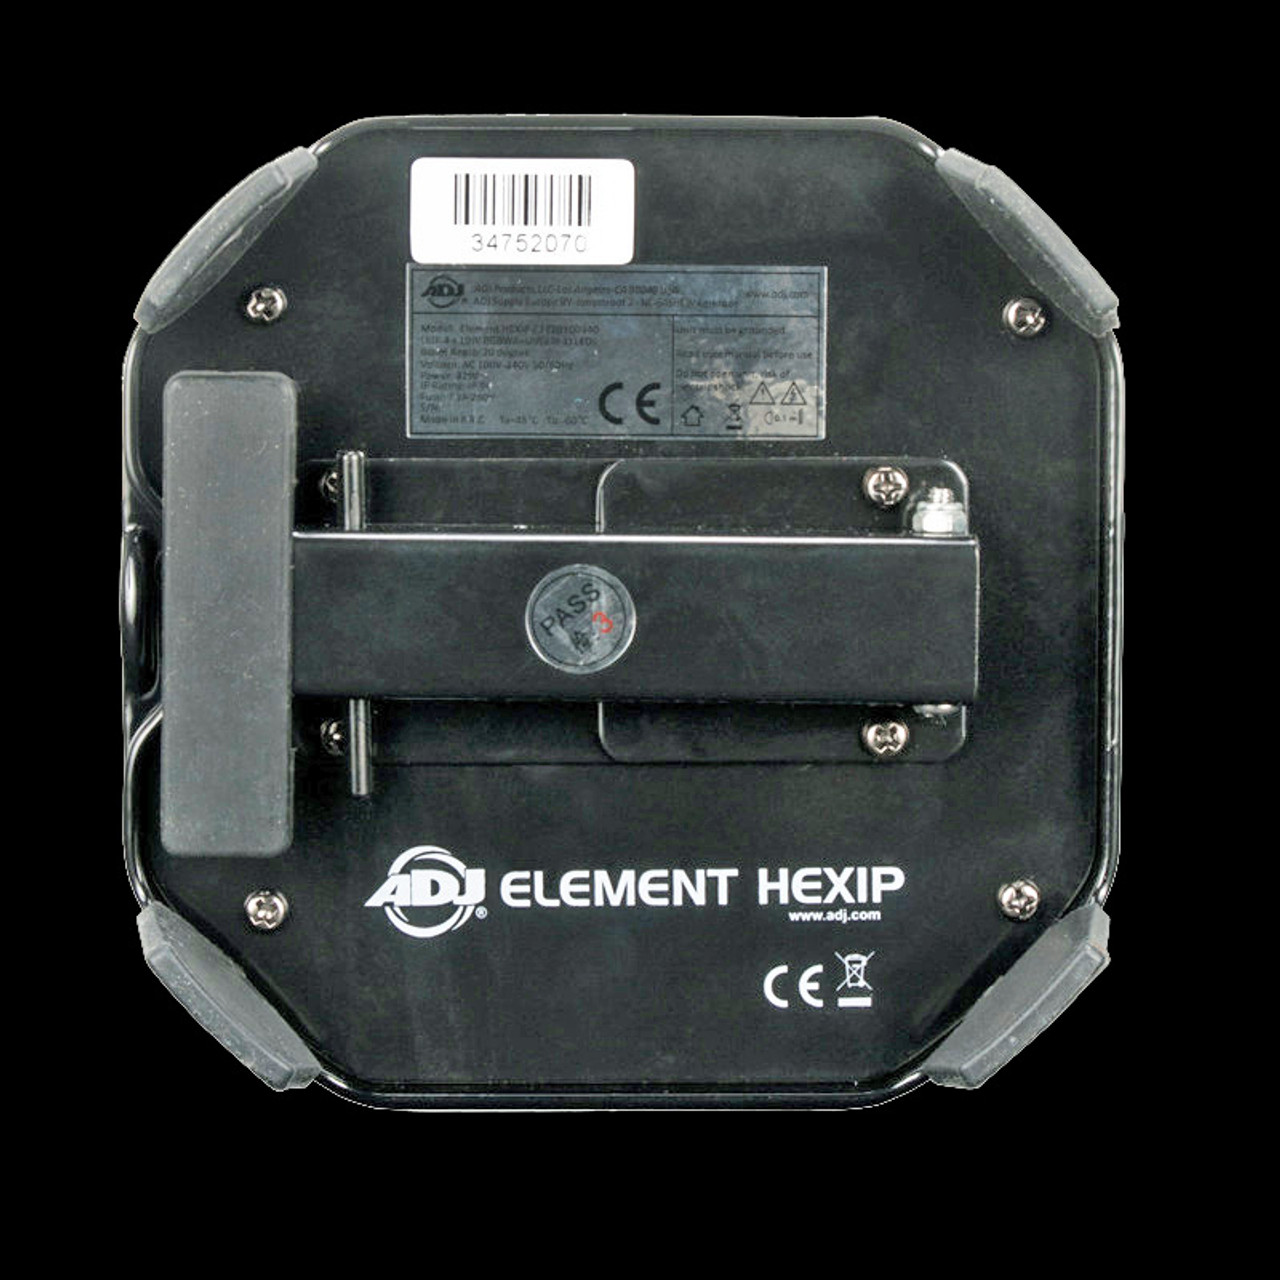 ADJ Element HEX IP PC6 Pak IP54 Battery PWD LED Par Can Package w/ Wireless DMX